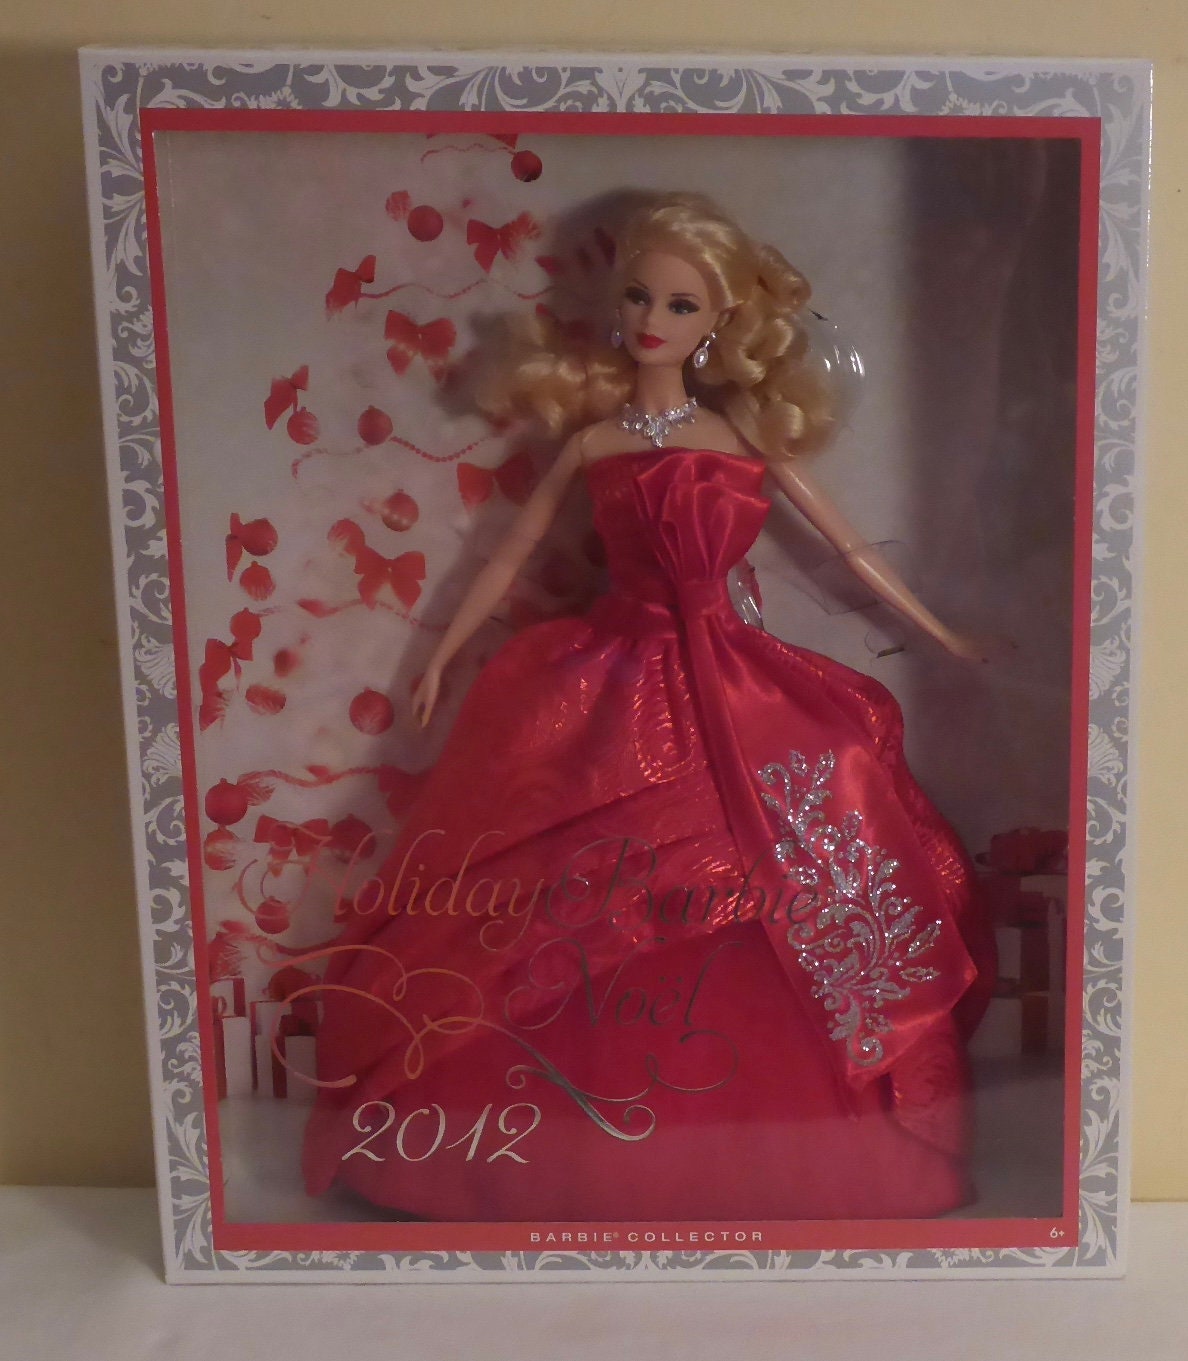 Cokes droefheid licht 2012 Christmas Barbie New in Box 2012 Holiday Barber Noel - Etsy